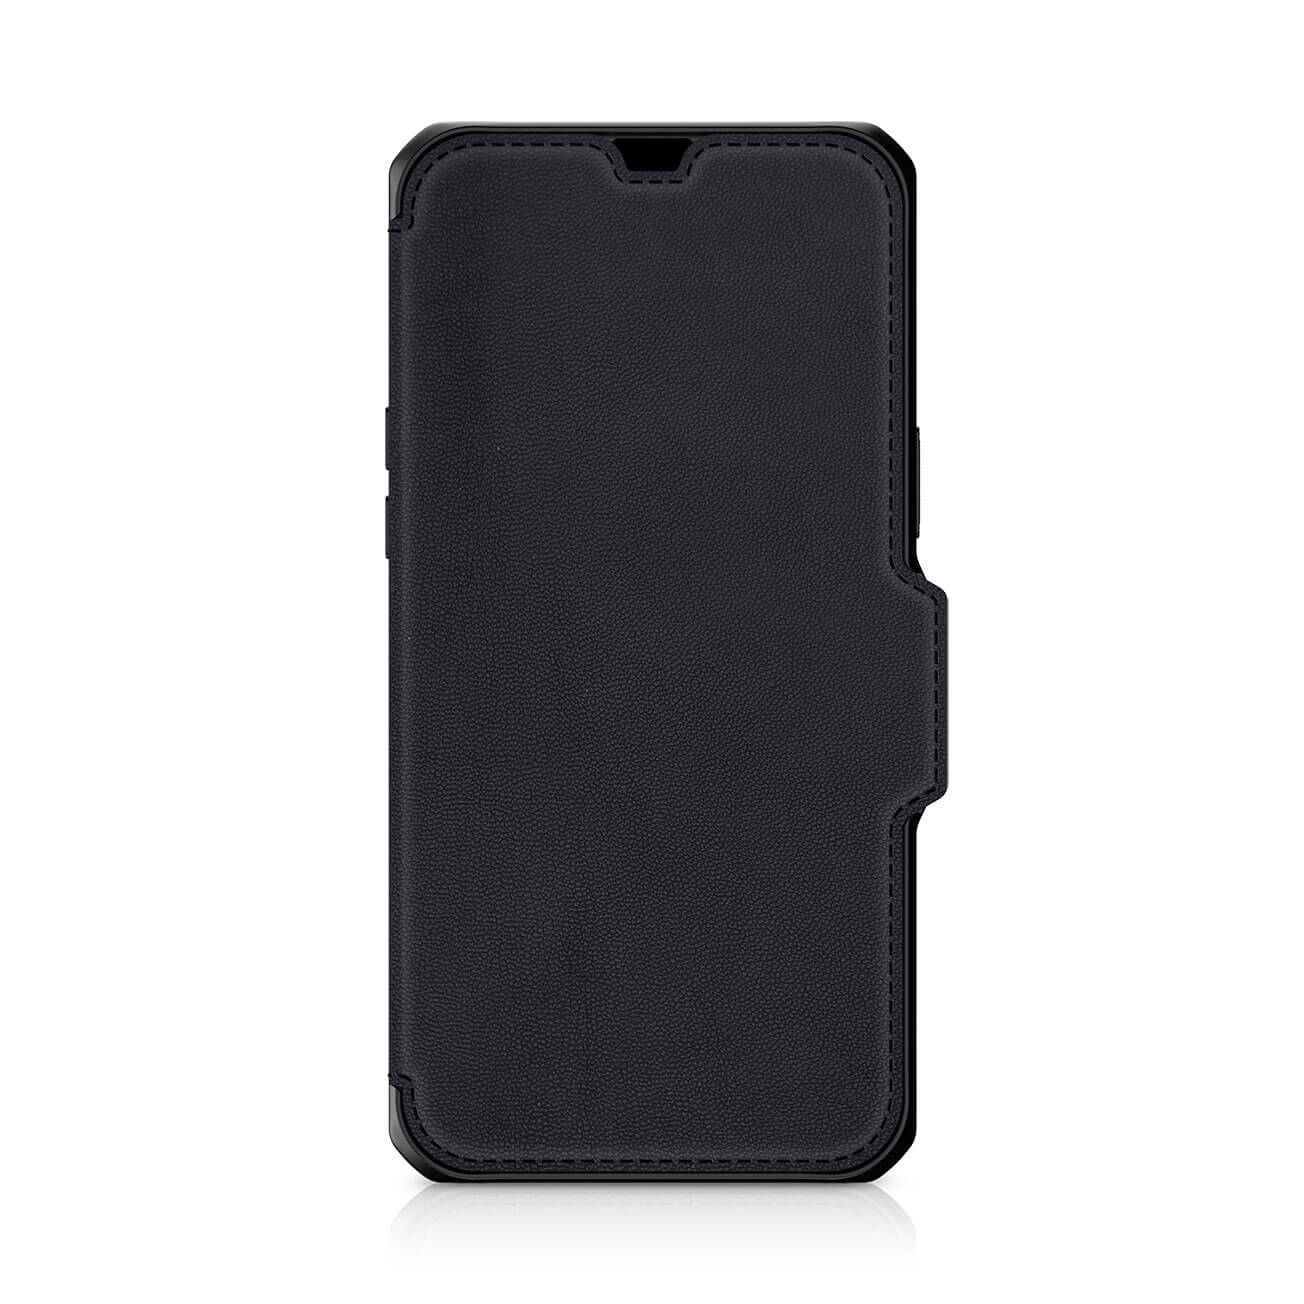 ITSKINS - Hybrid Folio Leather for iPhone 13 mini/12 mini [ Black with real leather ]